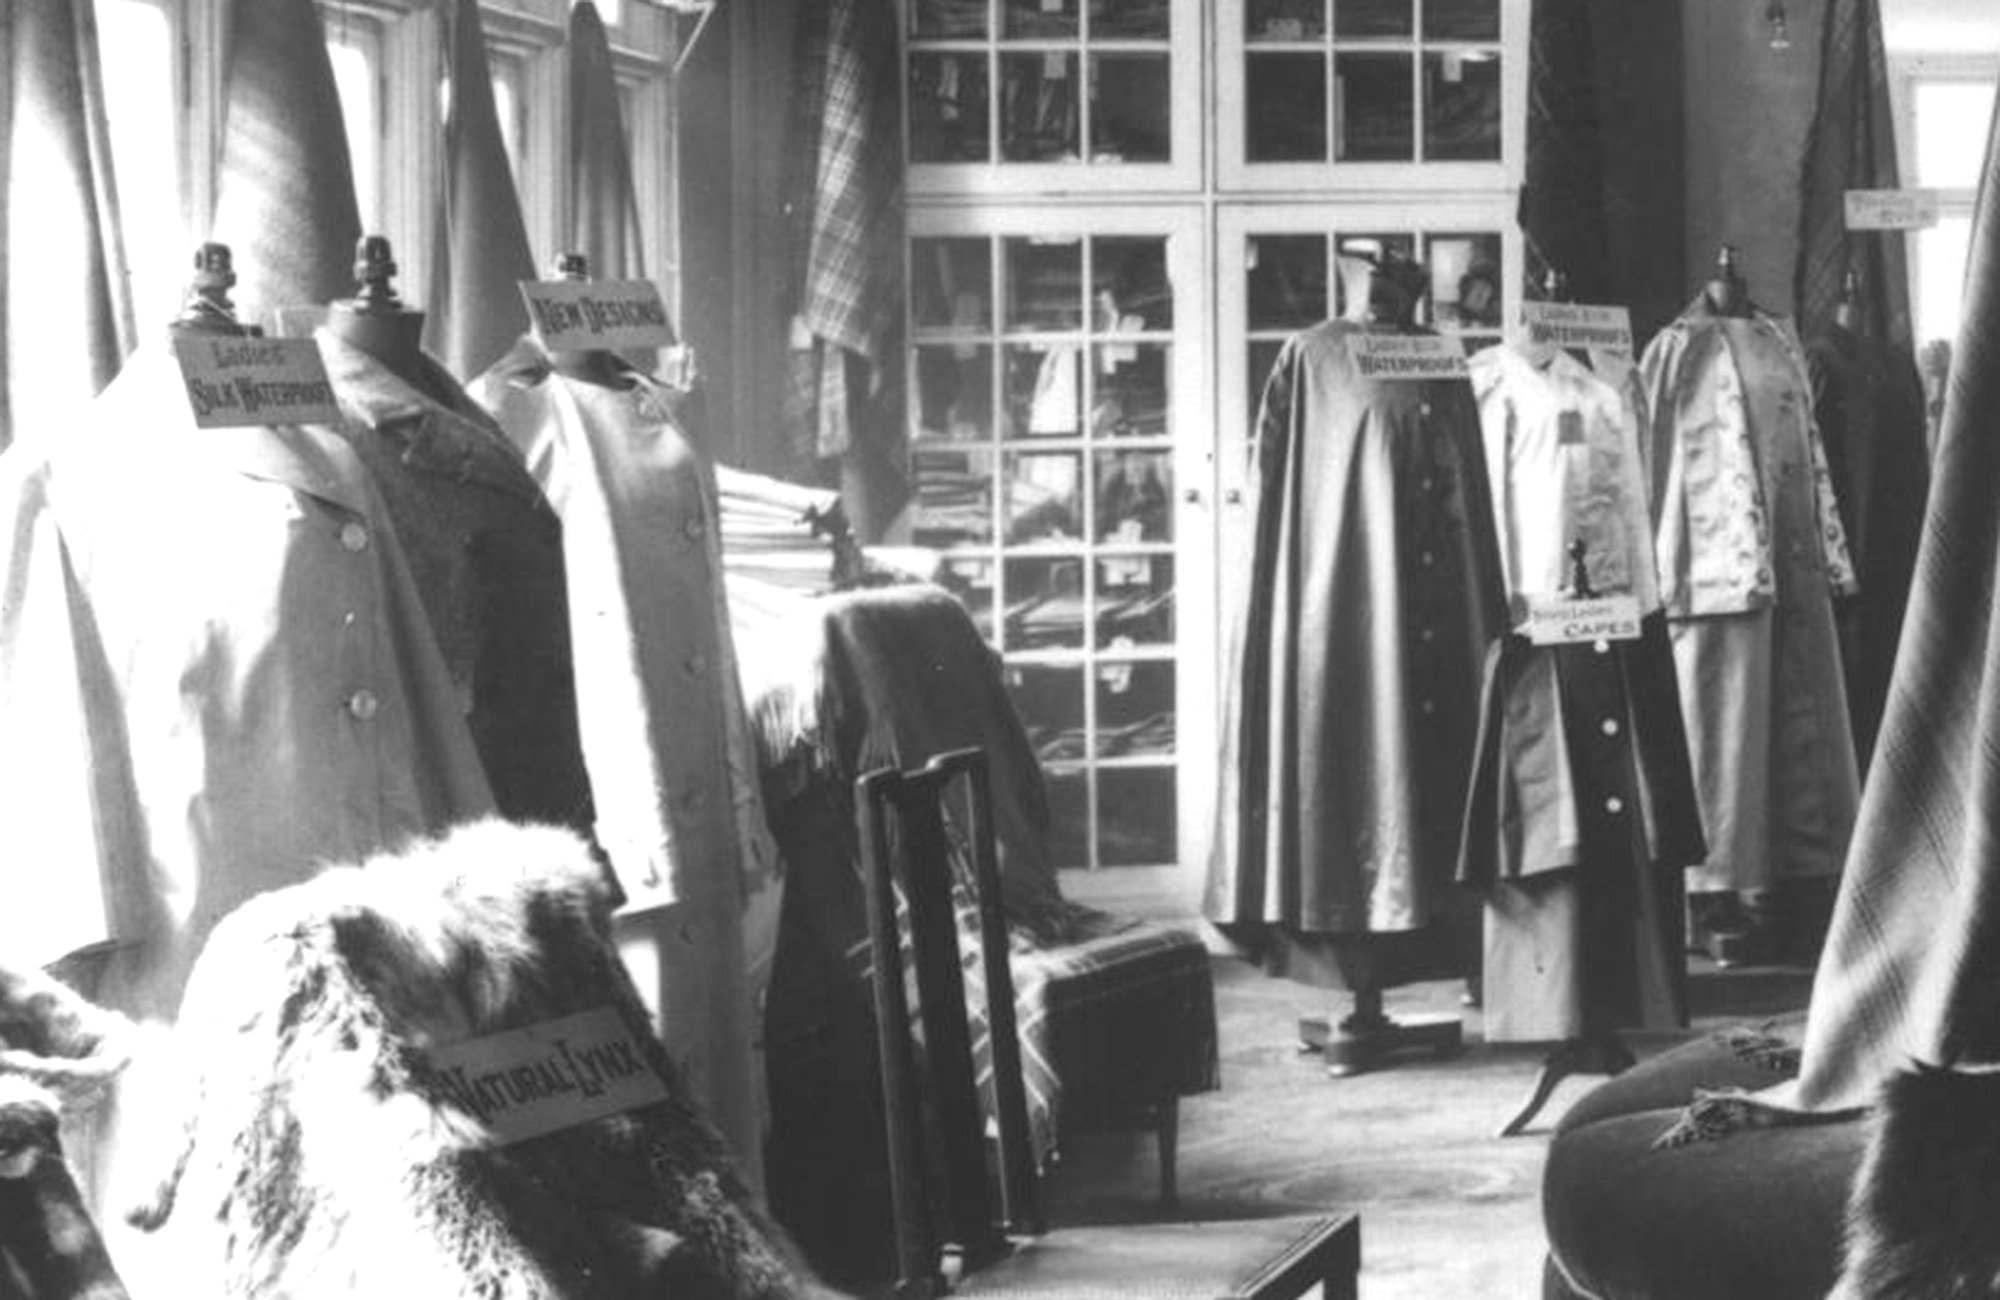 Cordings interior circa 1906 showing the outerwear collection.